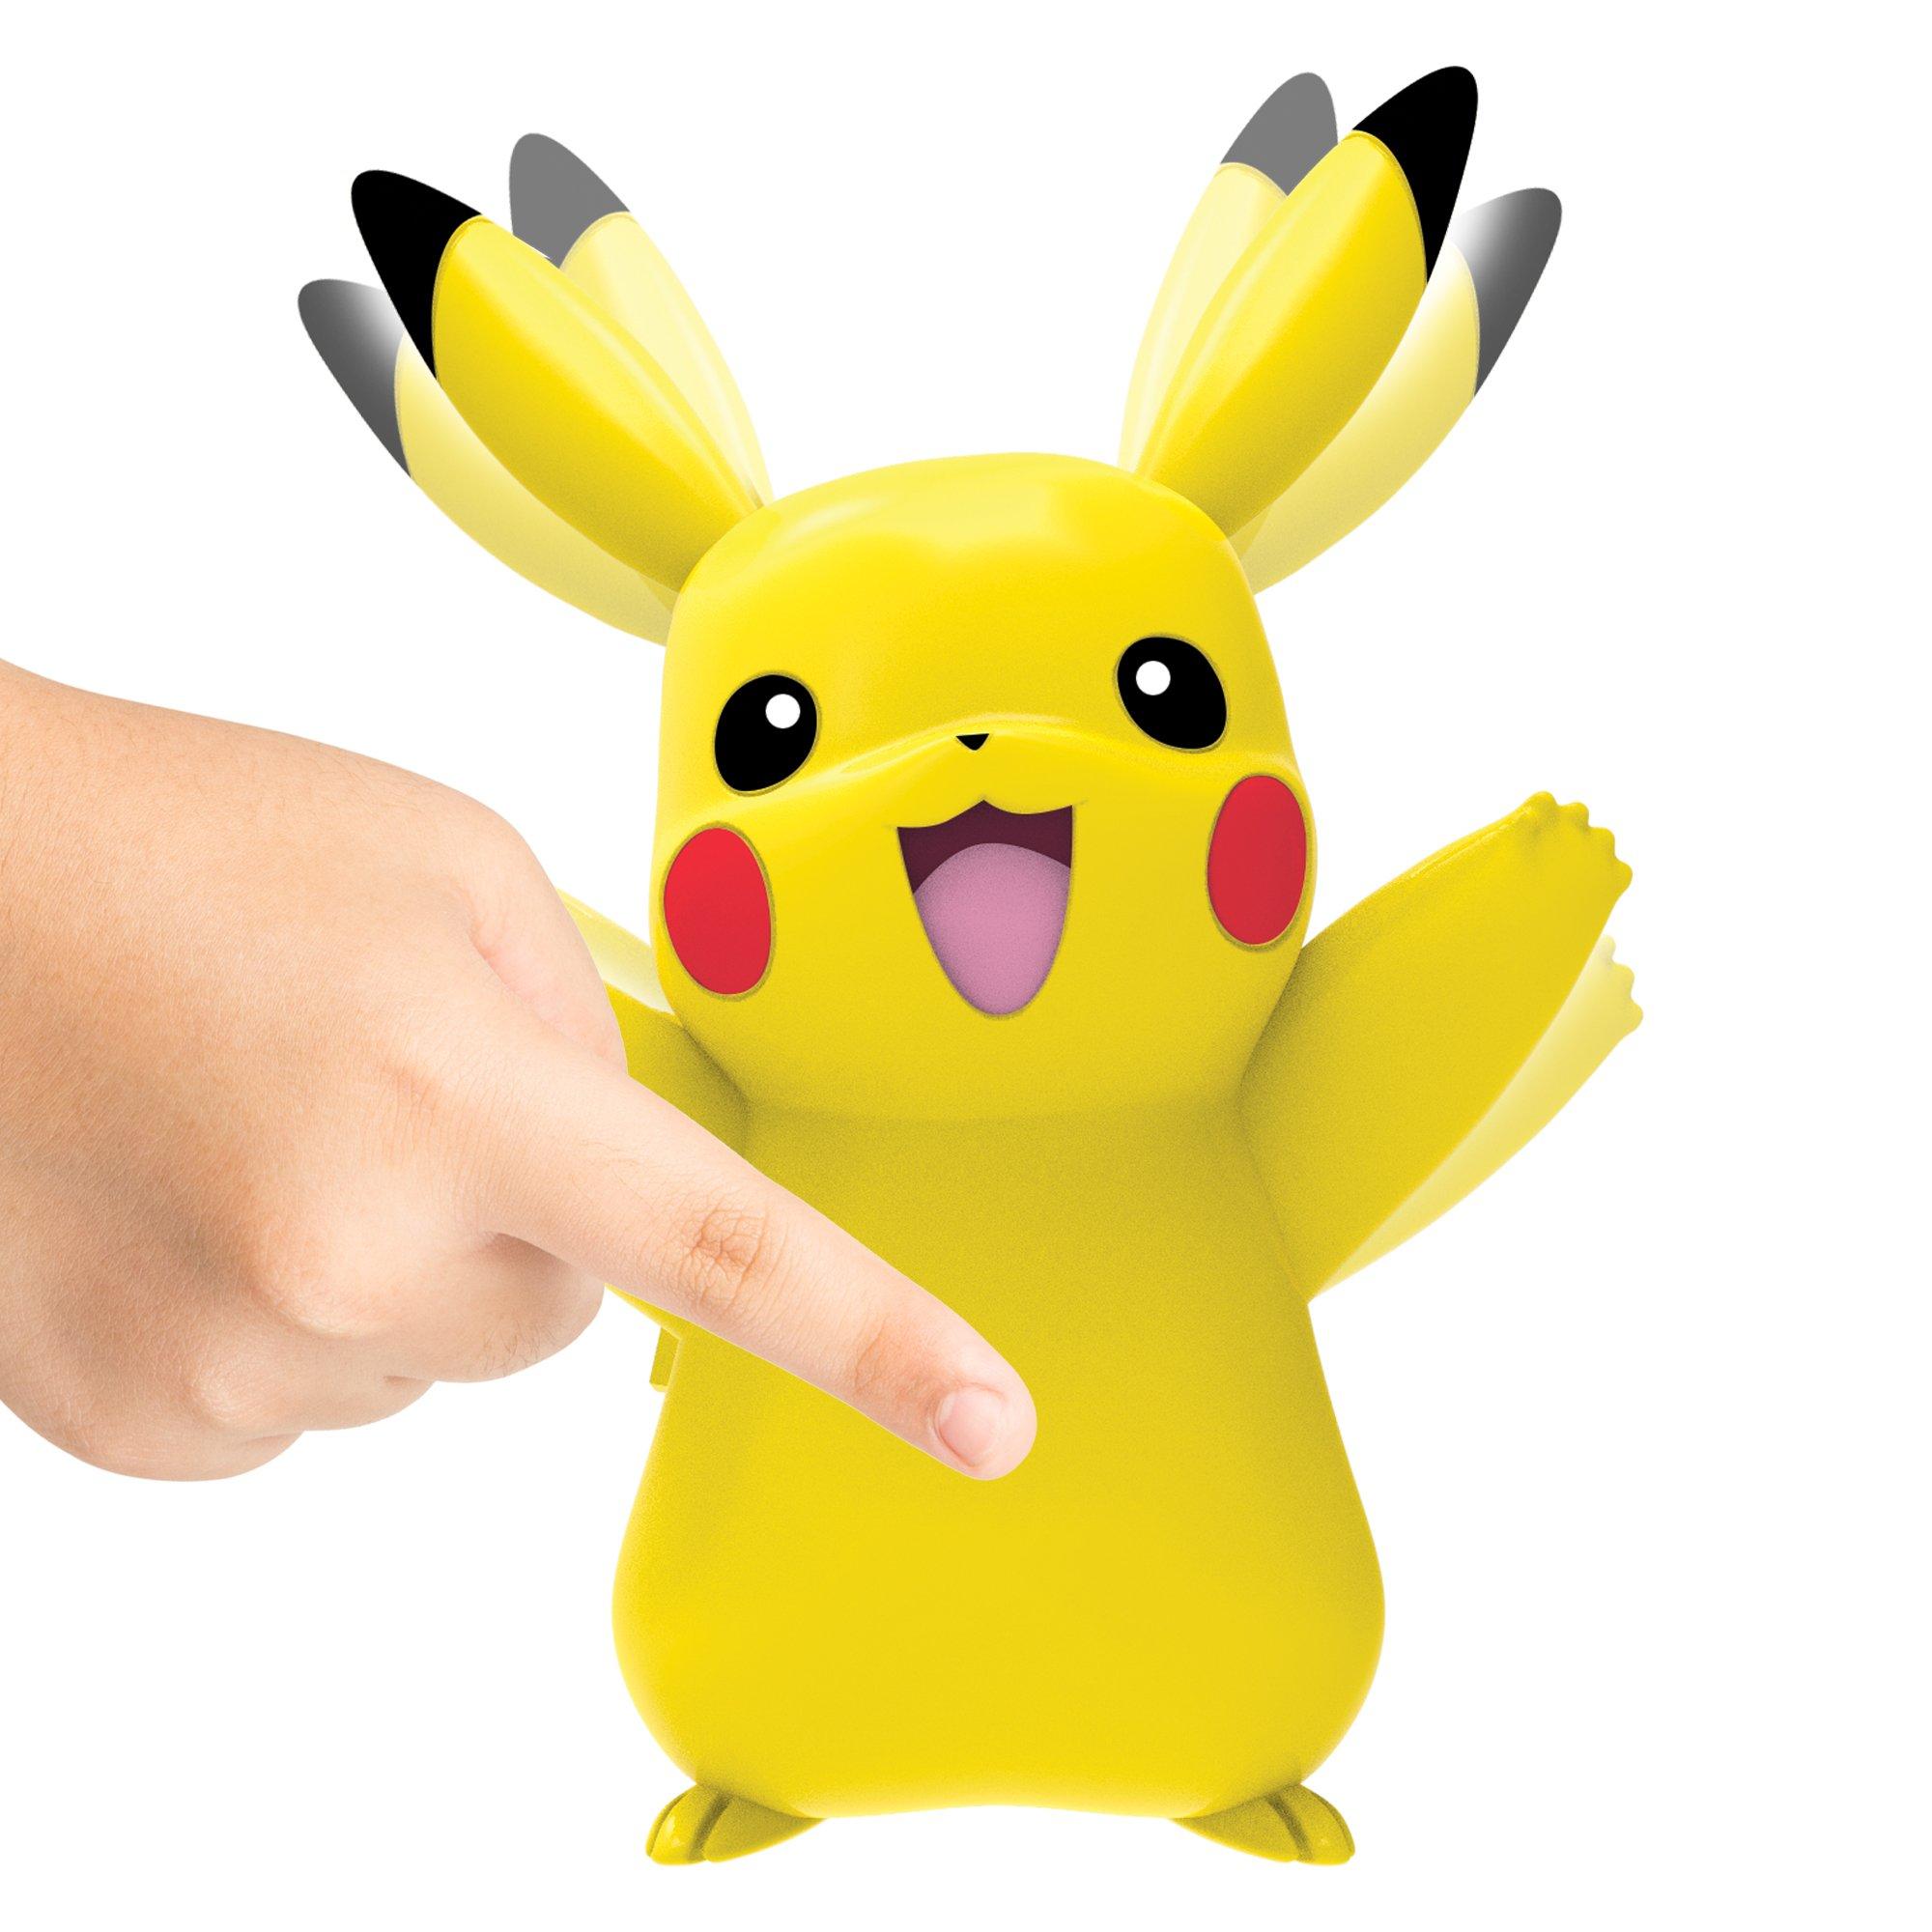 my partner pikachu action figure